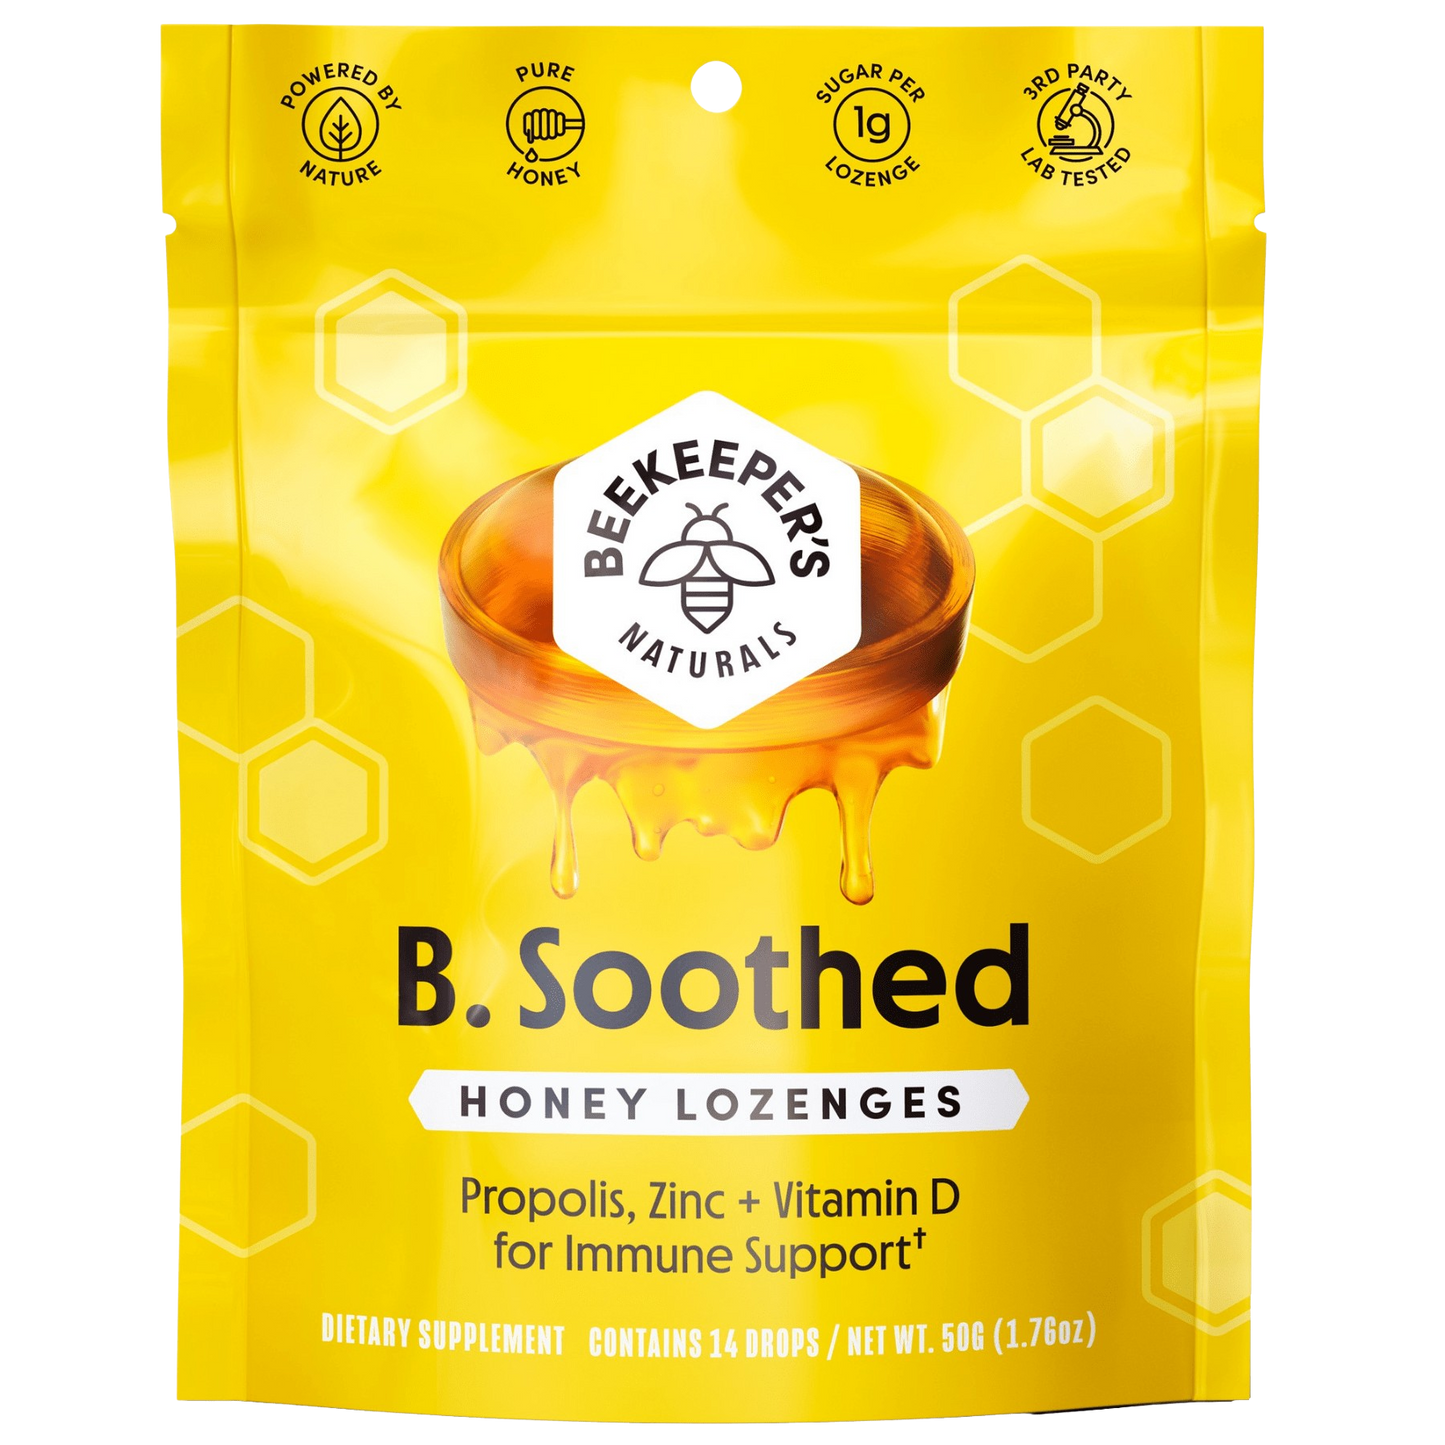 Beekeeper's Naturals B. Soothed Honey Lozenges